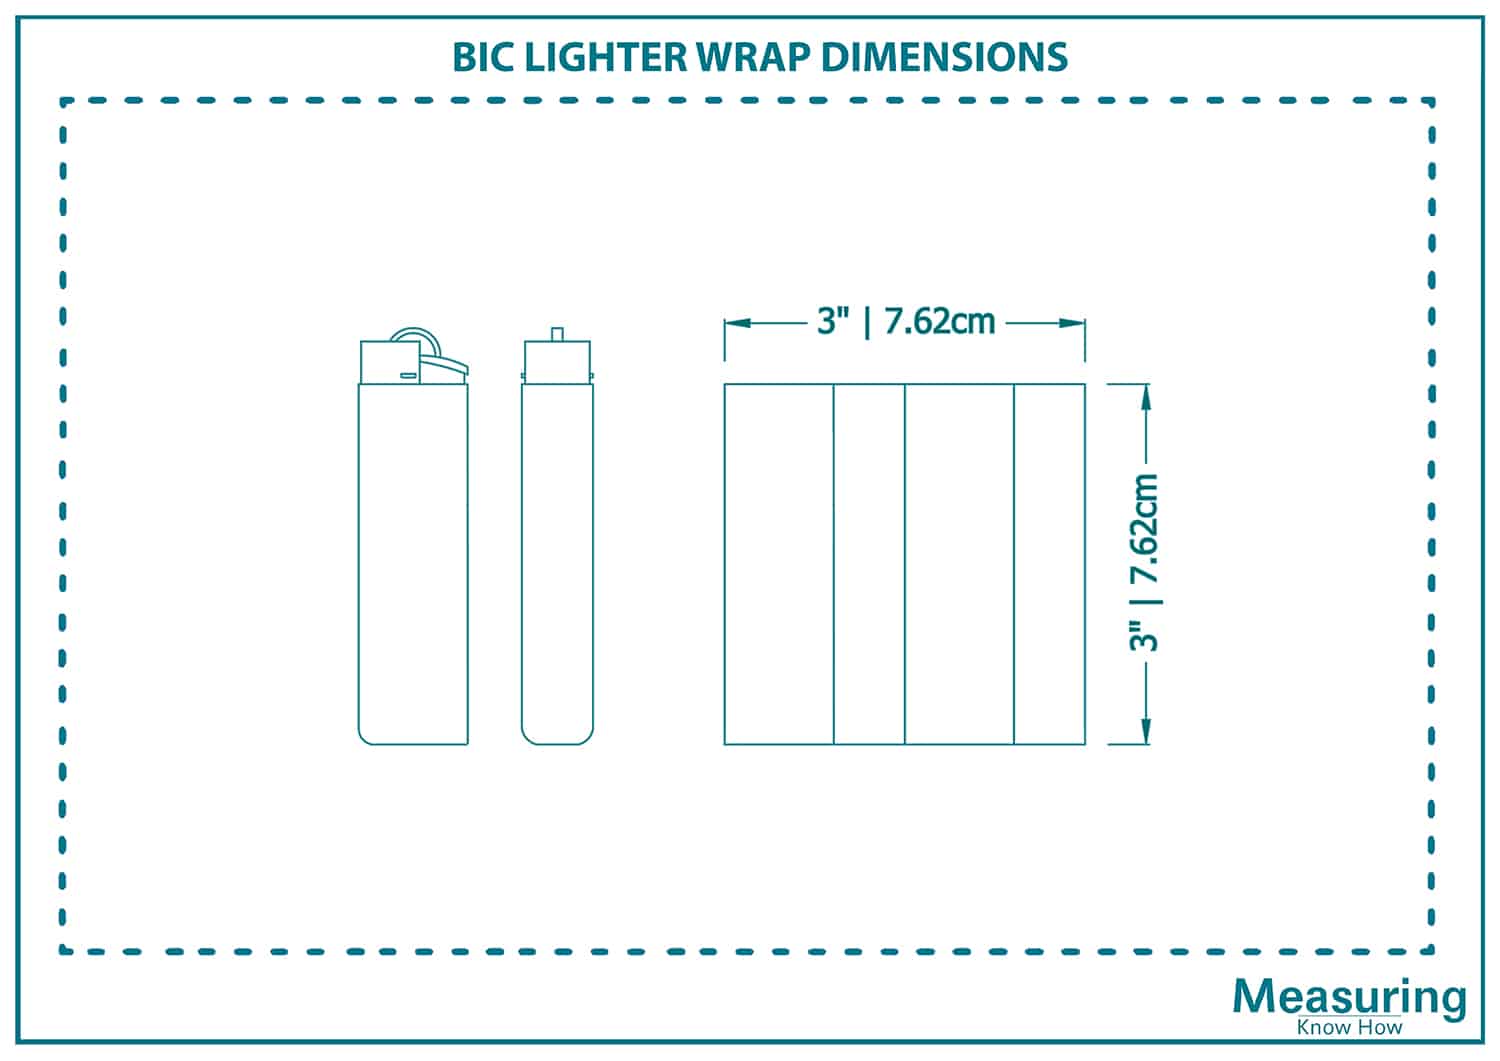 BIC lighter wrap dimensions